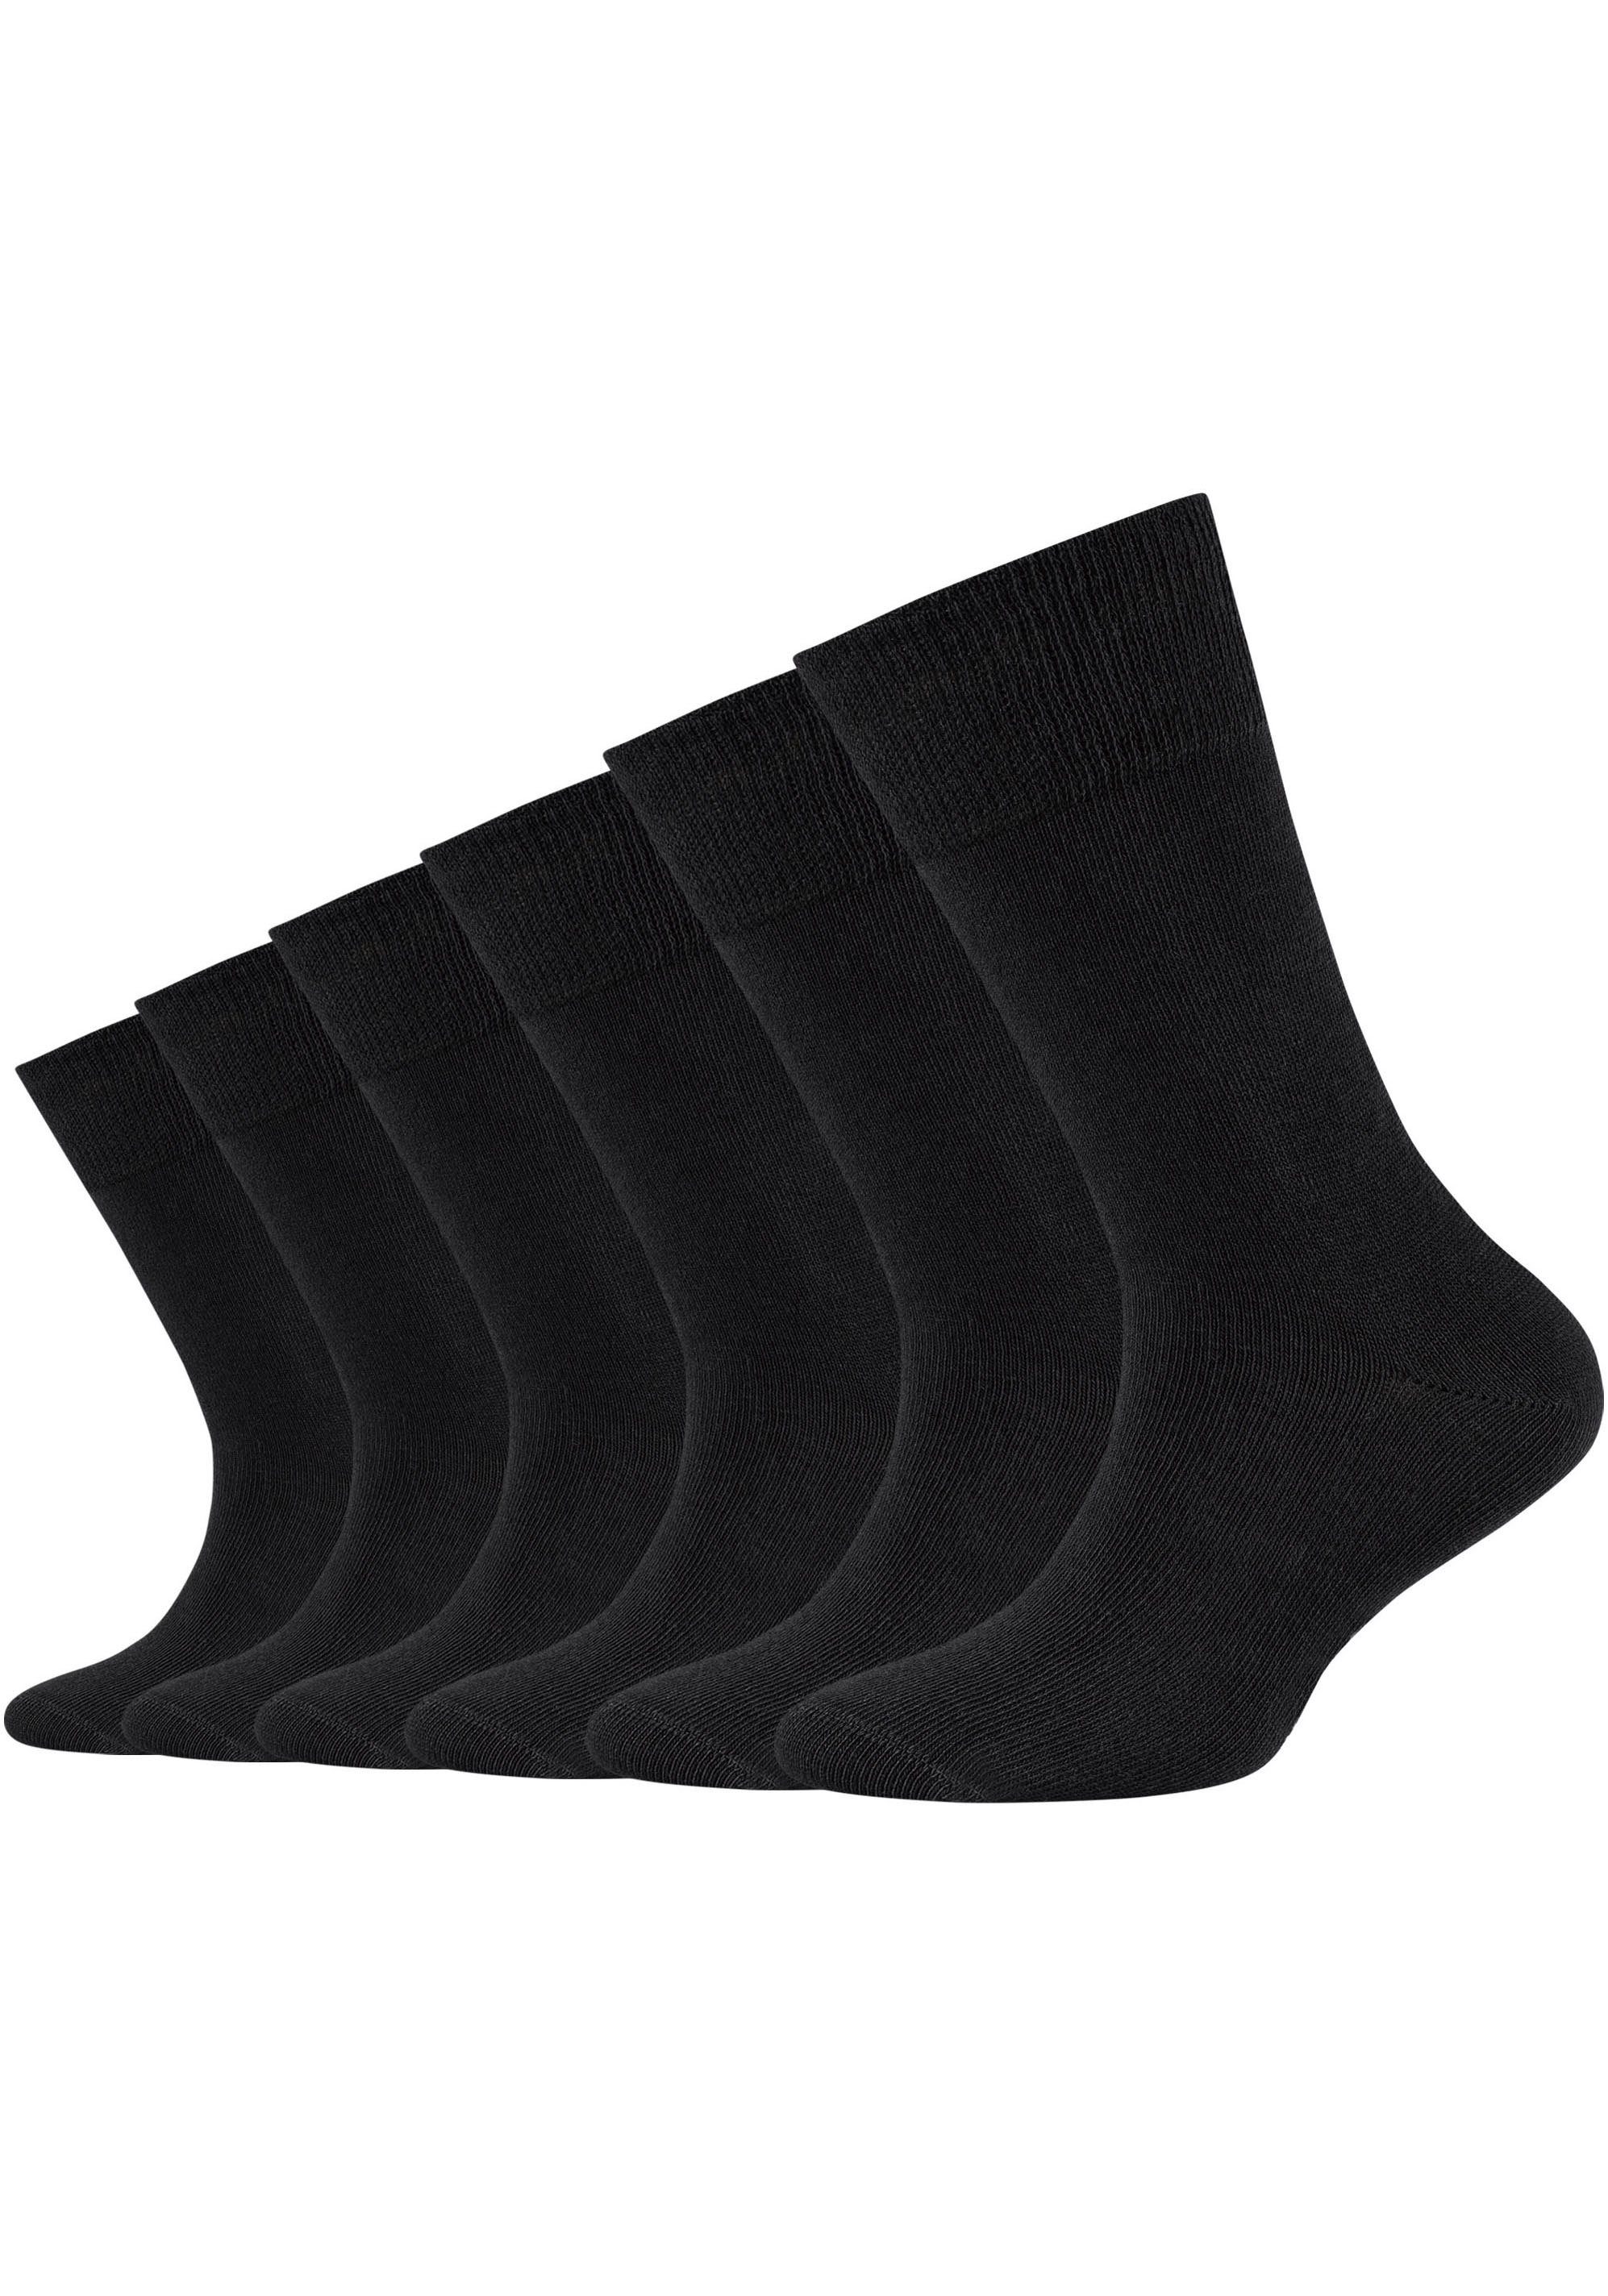 Camano Socken (Packung, 6-Paar) Hoher Anteil an gekämmter Baumwolle,  Besonders bequem dank verstärkter Ferse und Zehenspitze